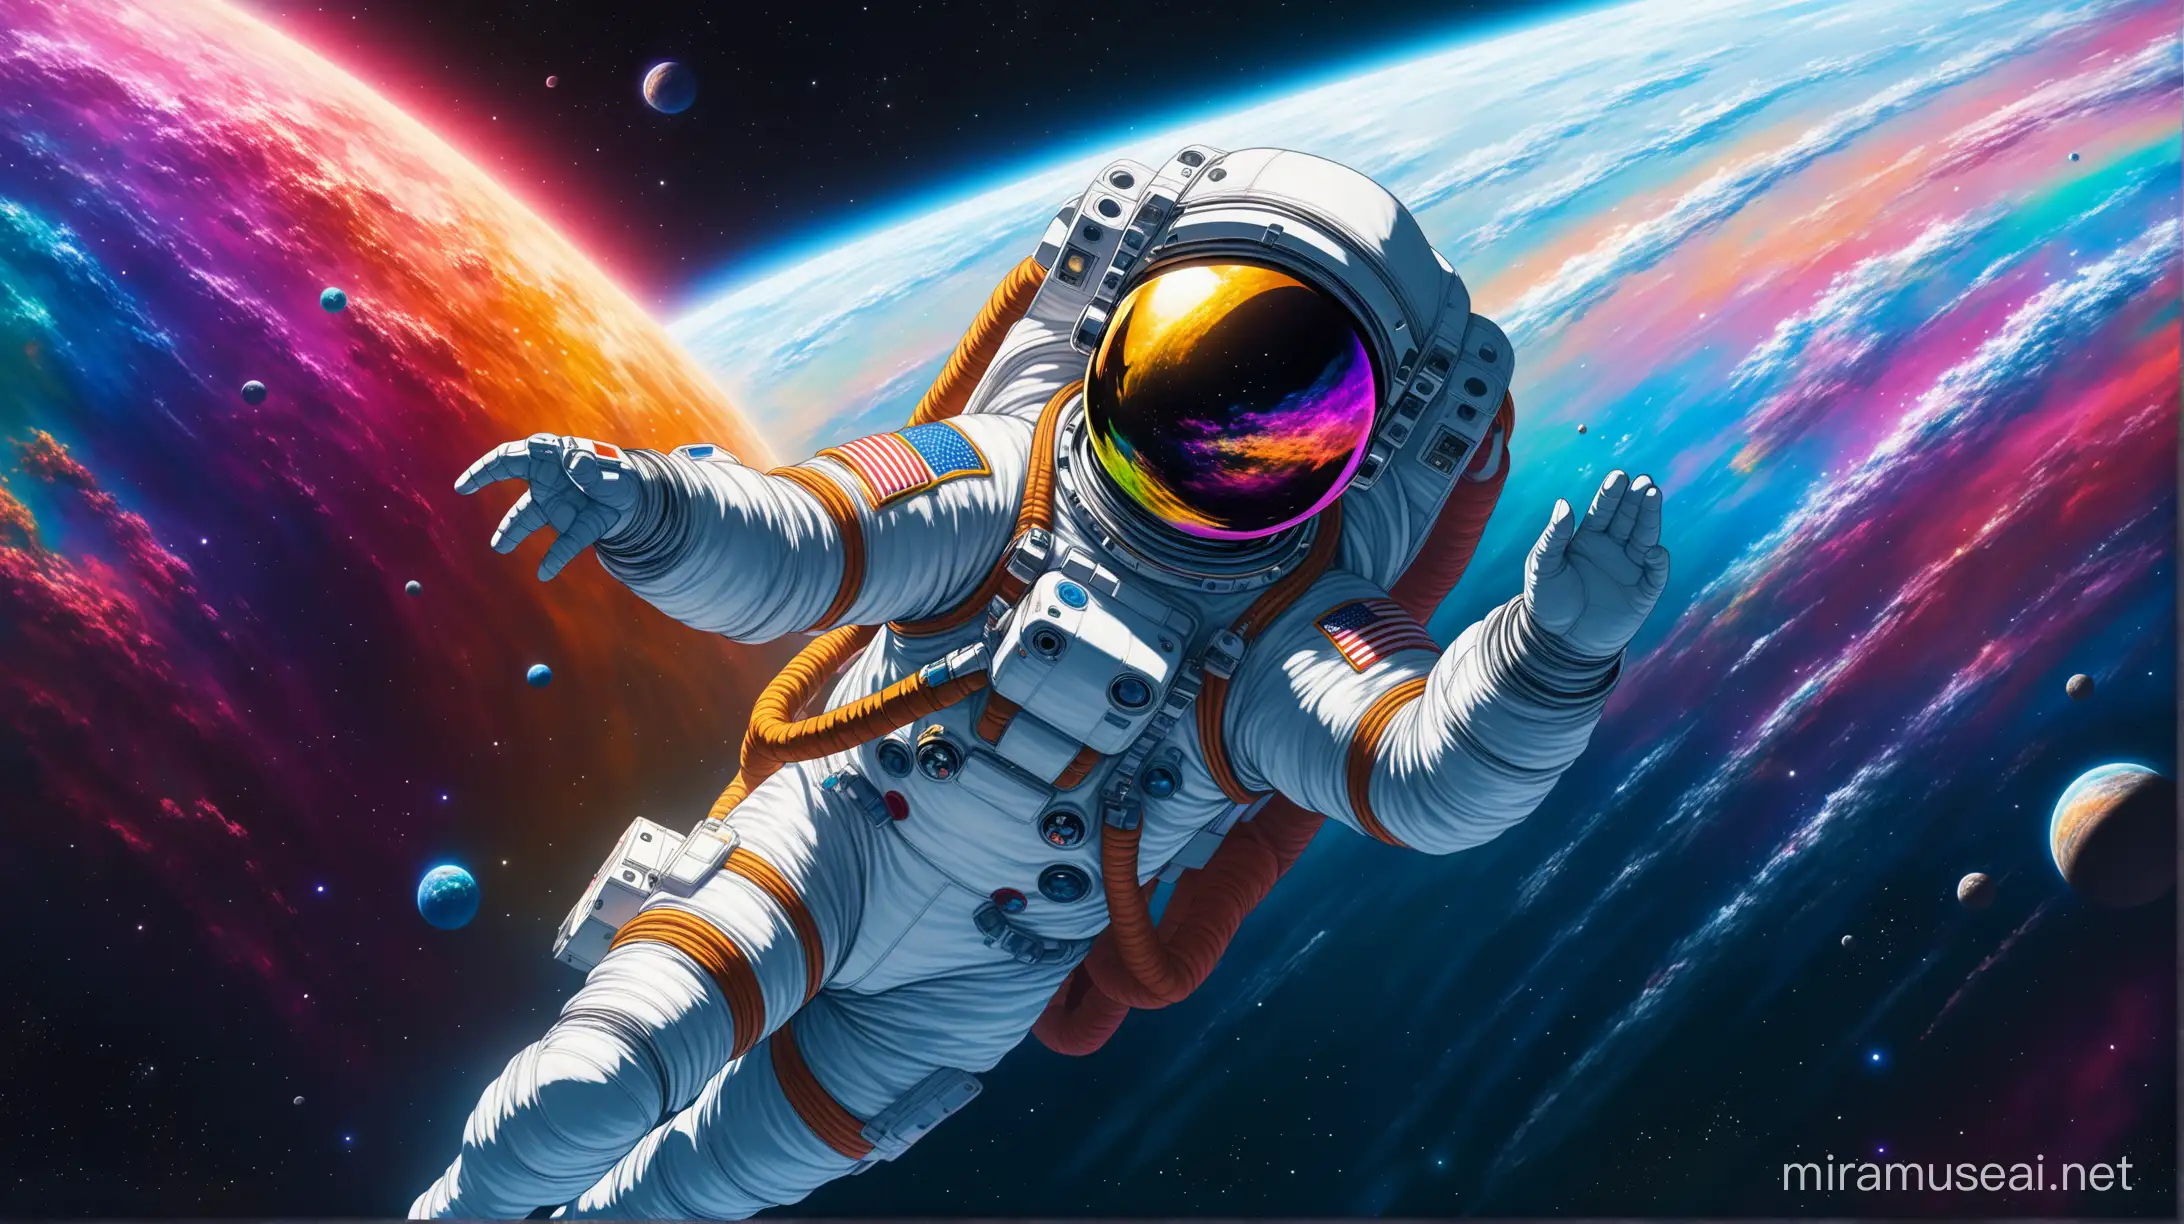 Astronaut in a Vivid Hyperrealistic Cosmic Wonderland